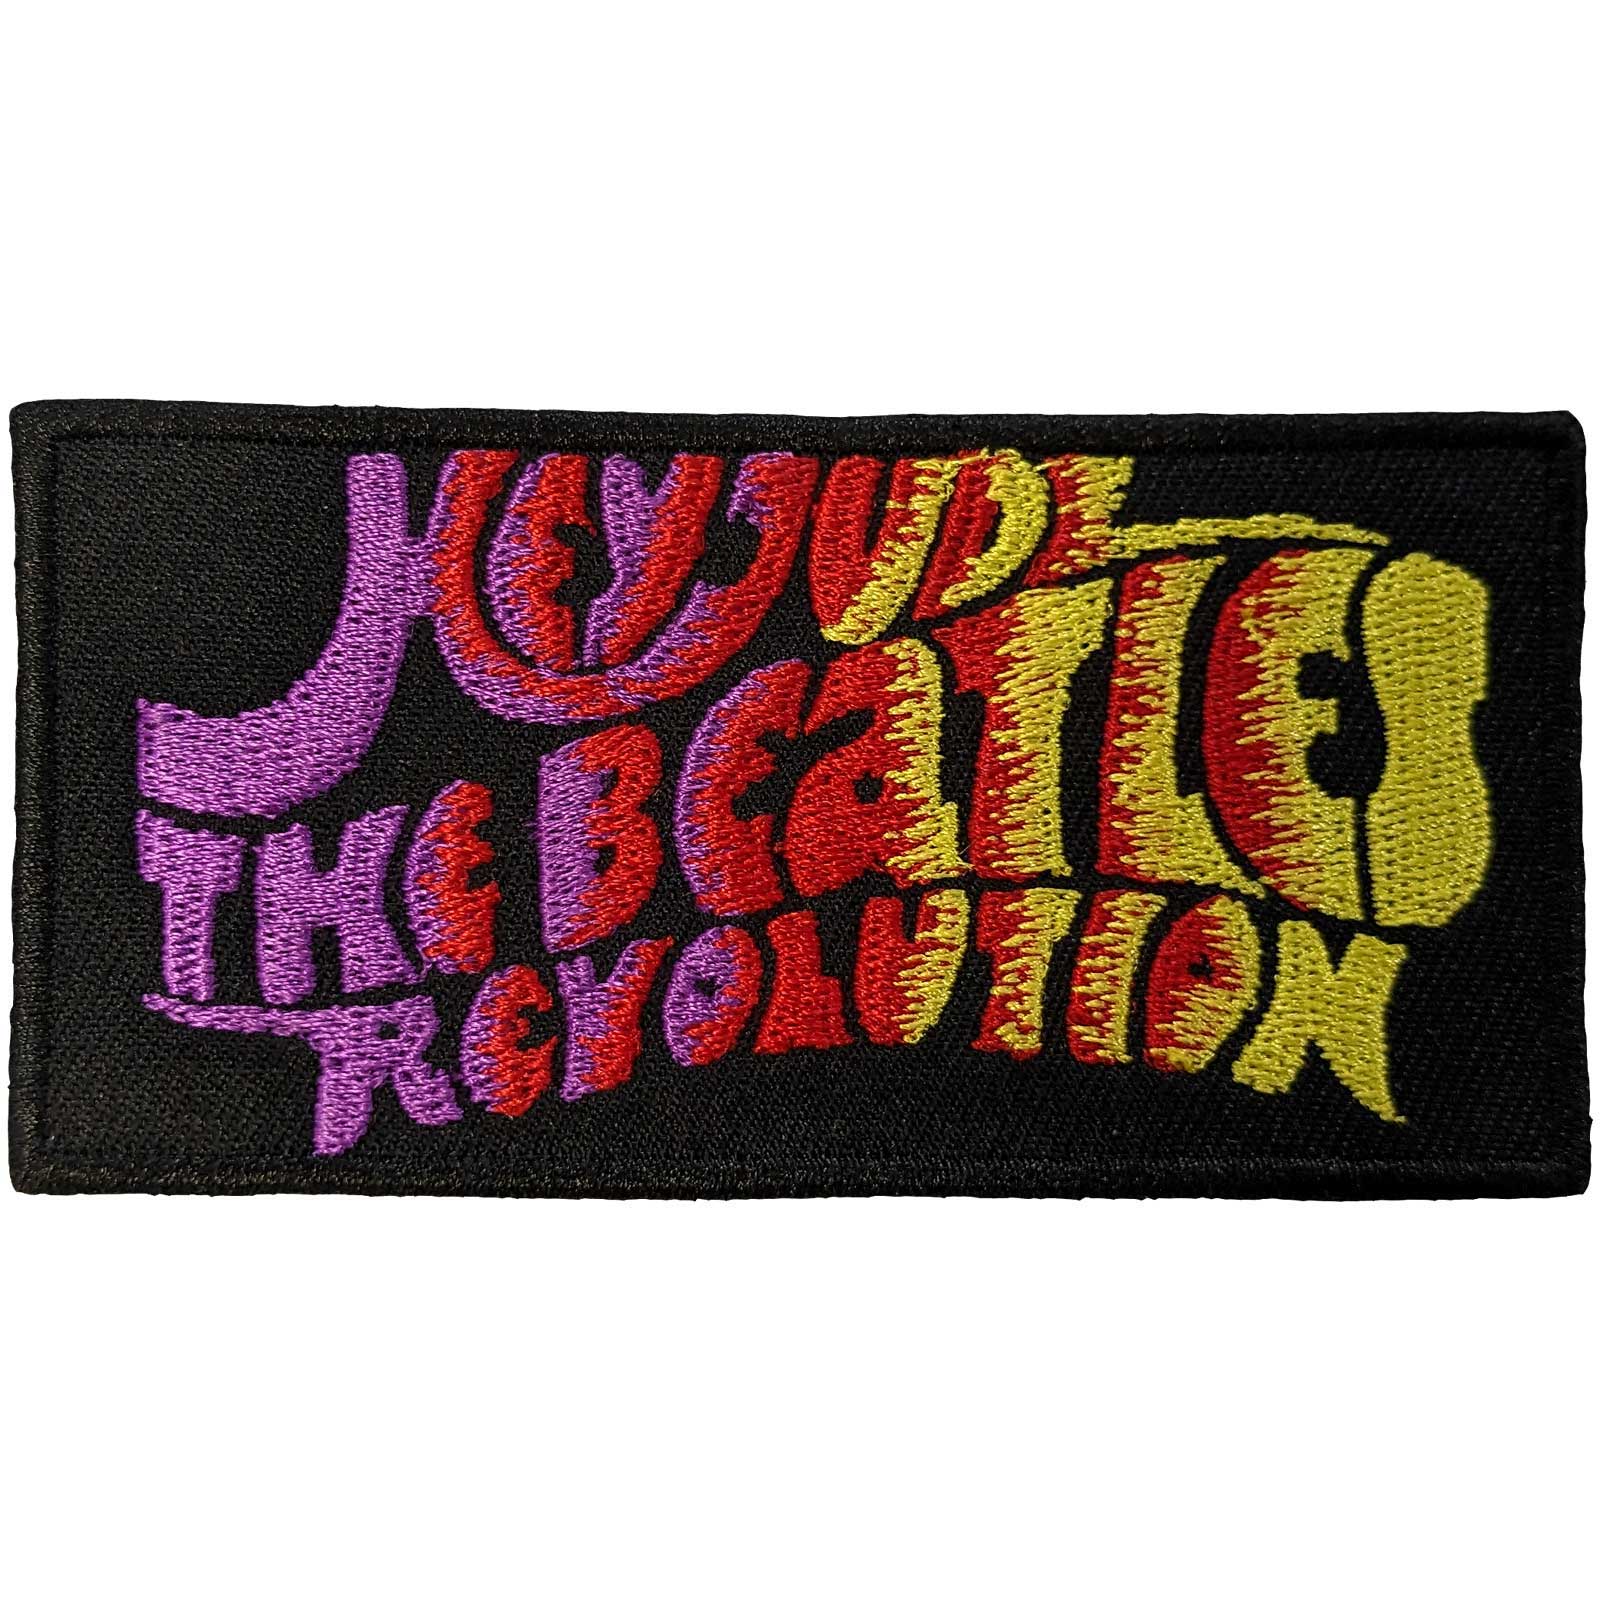 The Beatles Standard Patch: Hey Jude/Revolution